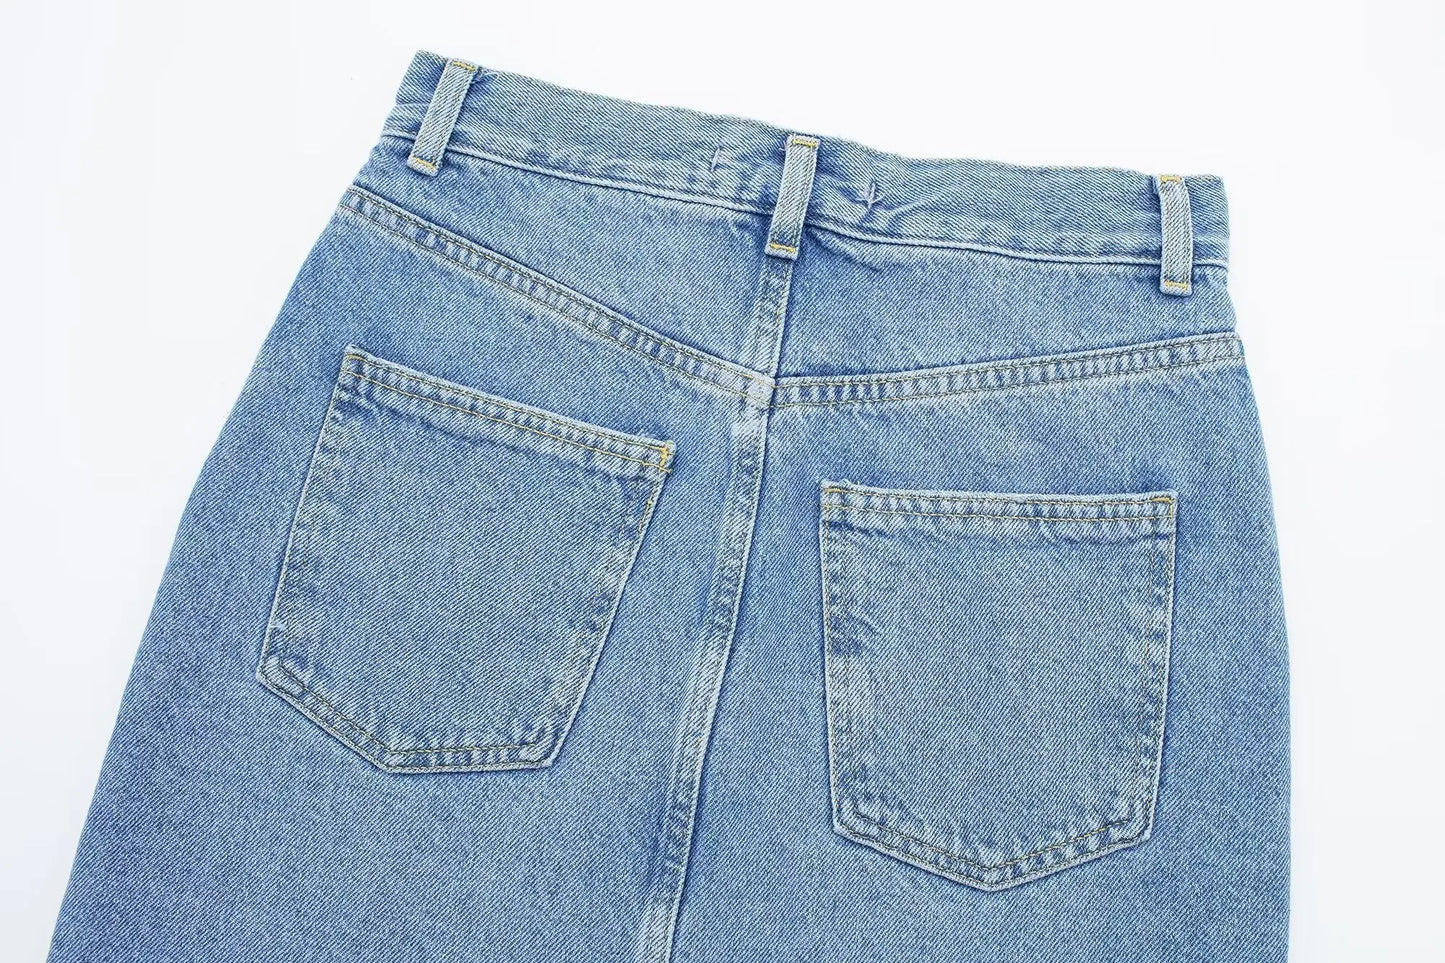 Denim  Blue Pencil Jeans Skirt